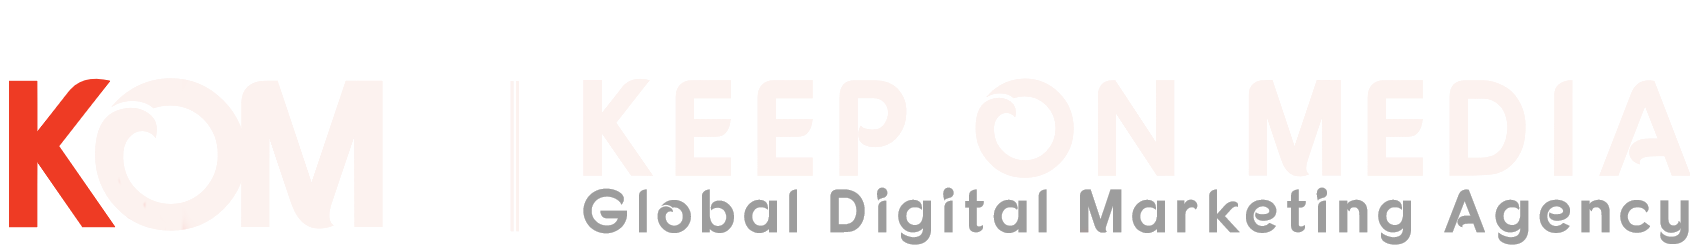 Keep On Media - Global Digital Marketing Agency